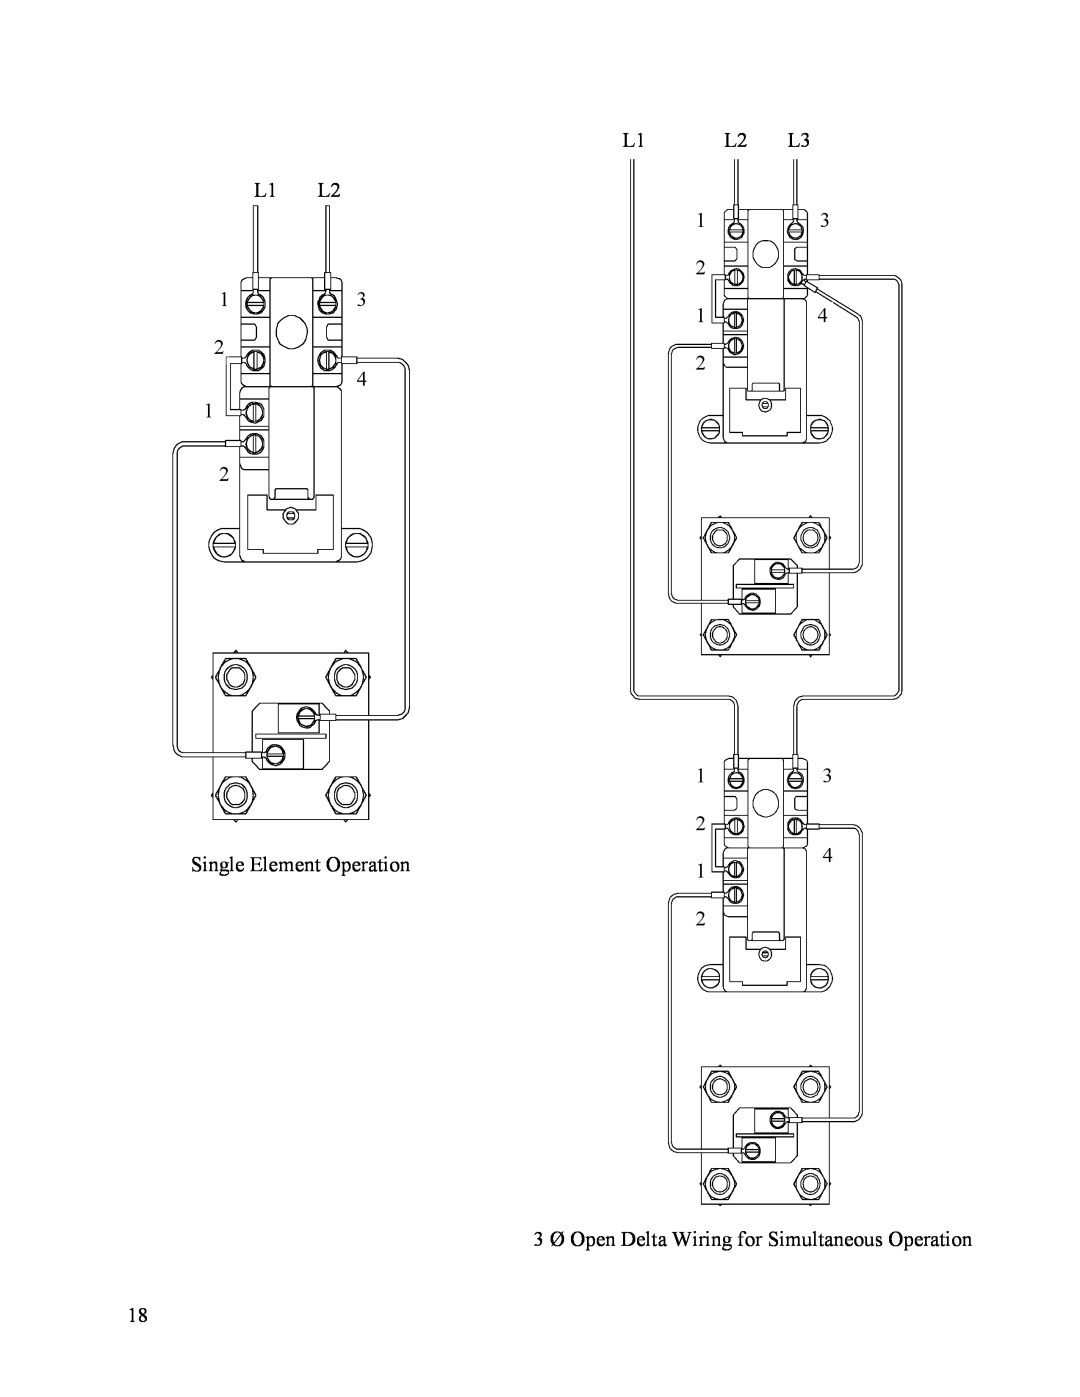 Hubbell Electric Heater Company SLN manual L1 L2 1 2 4 1 